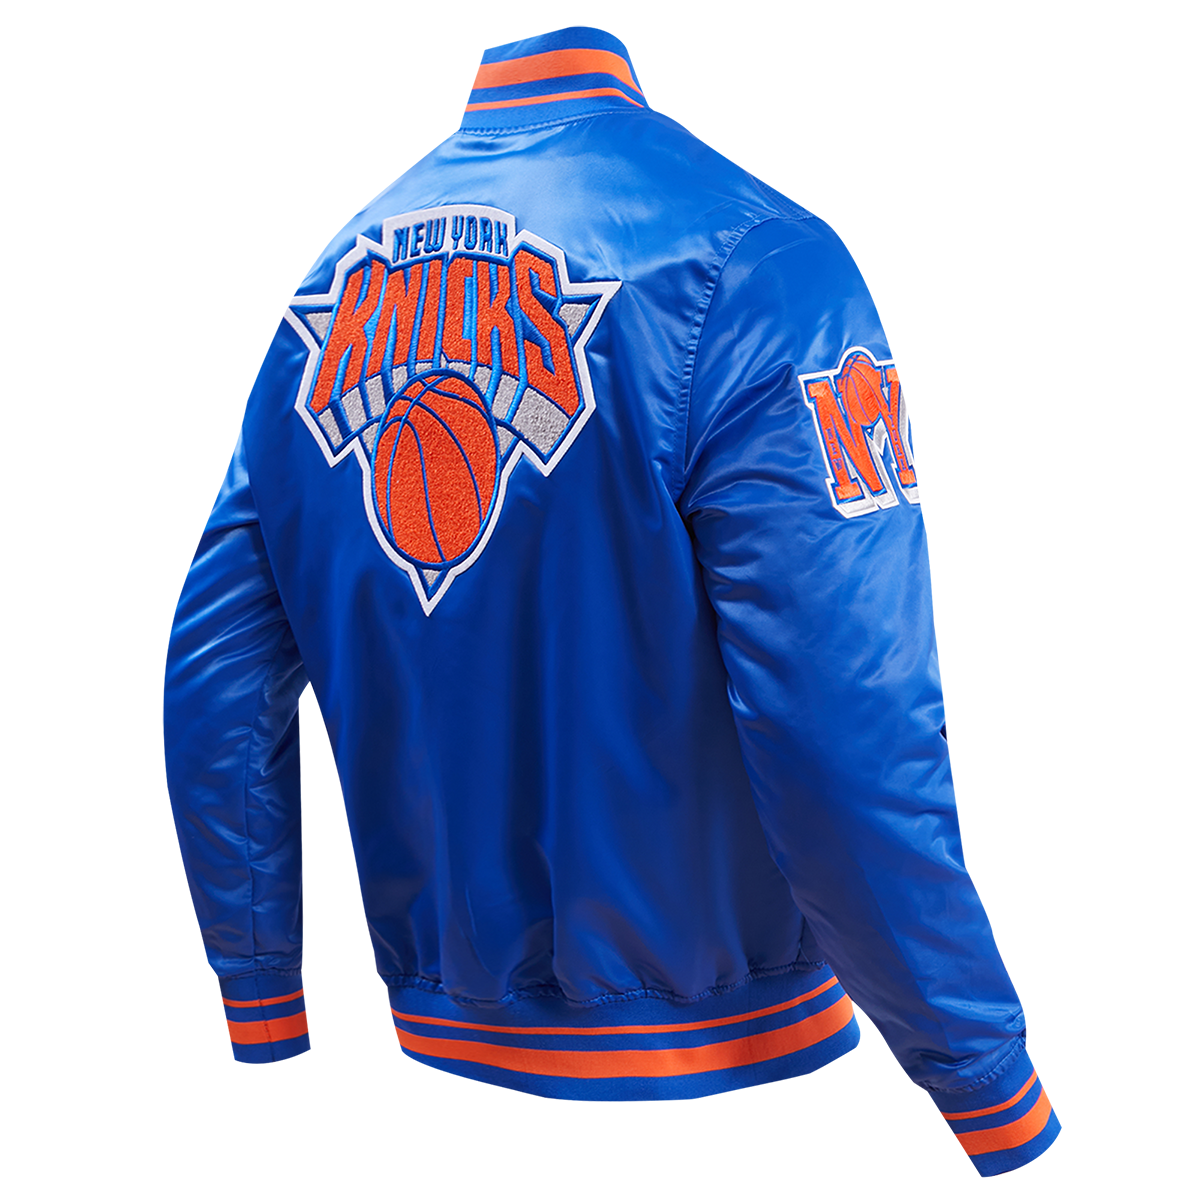 Pro Standard Men's New York Knicks Retro Classic Tee in Blue | Size XL | BNK156099-RYO